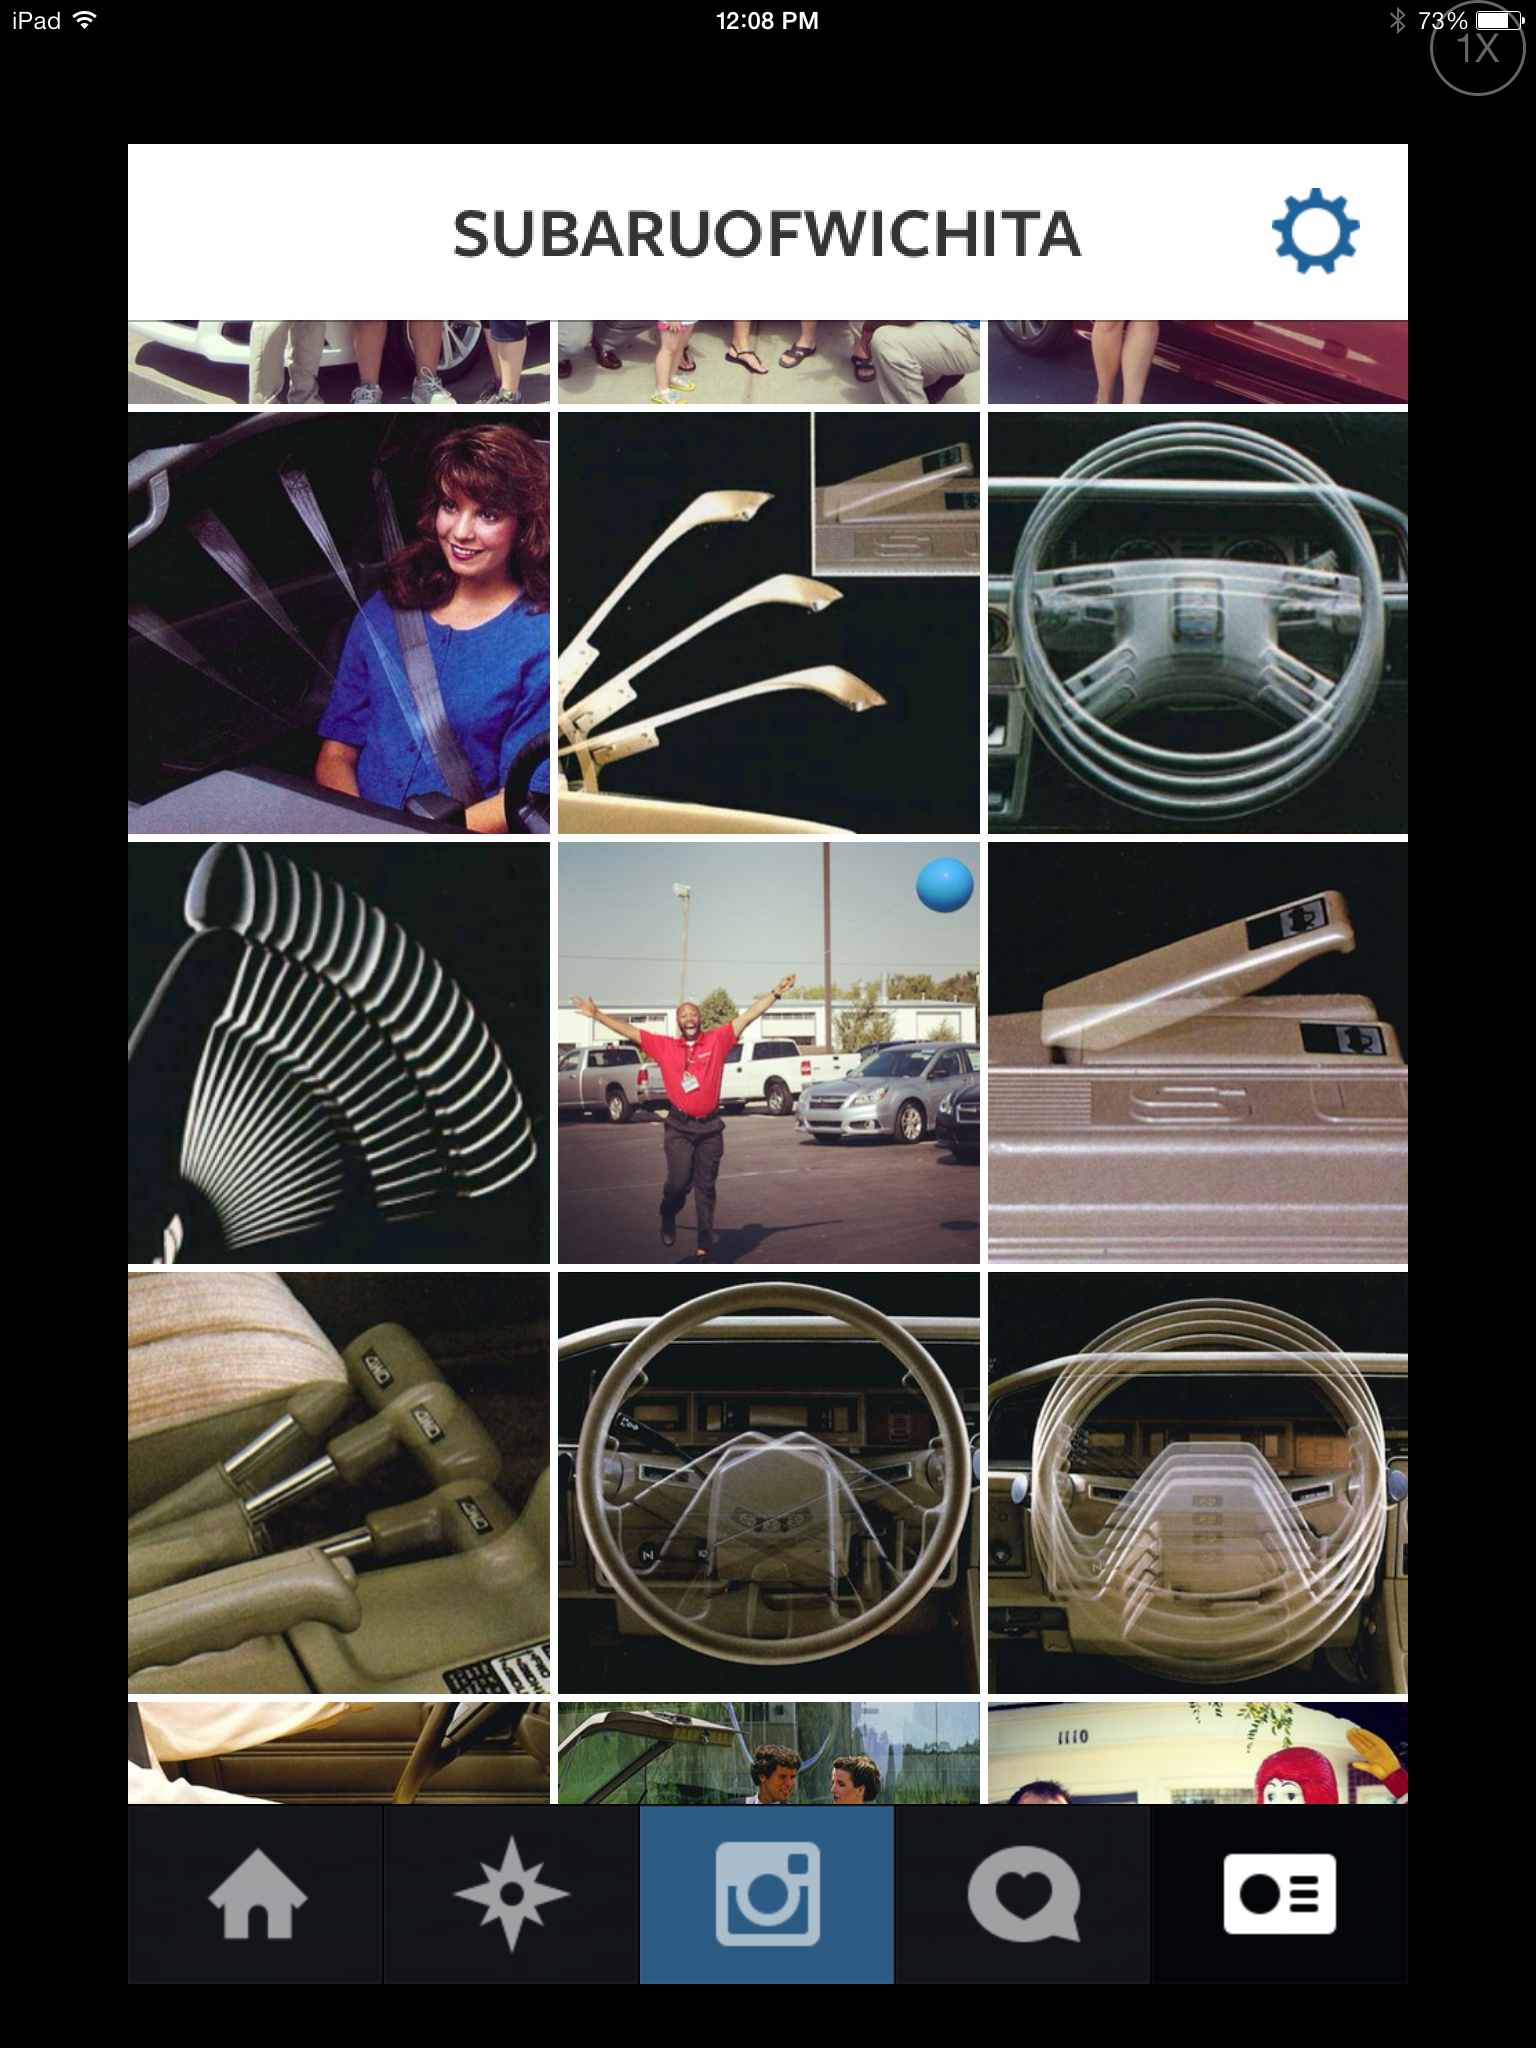 Subaru of Wichita on Instagram